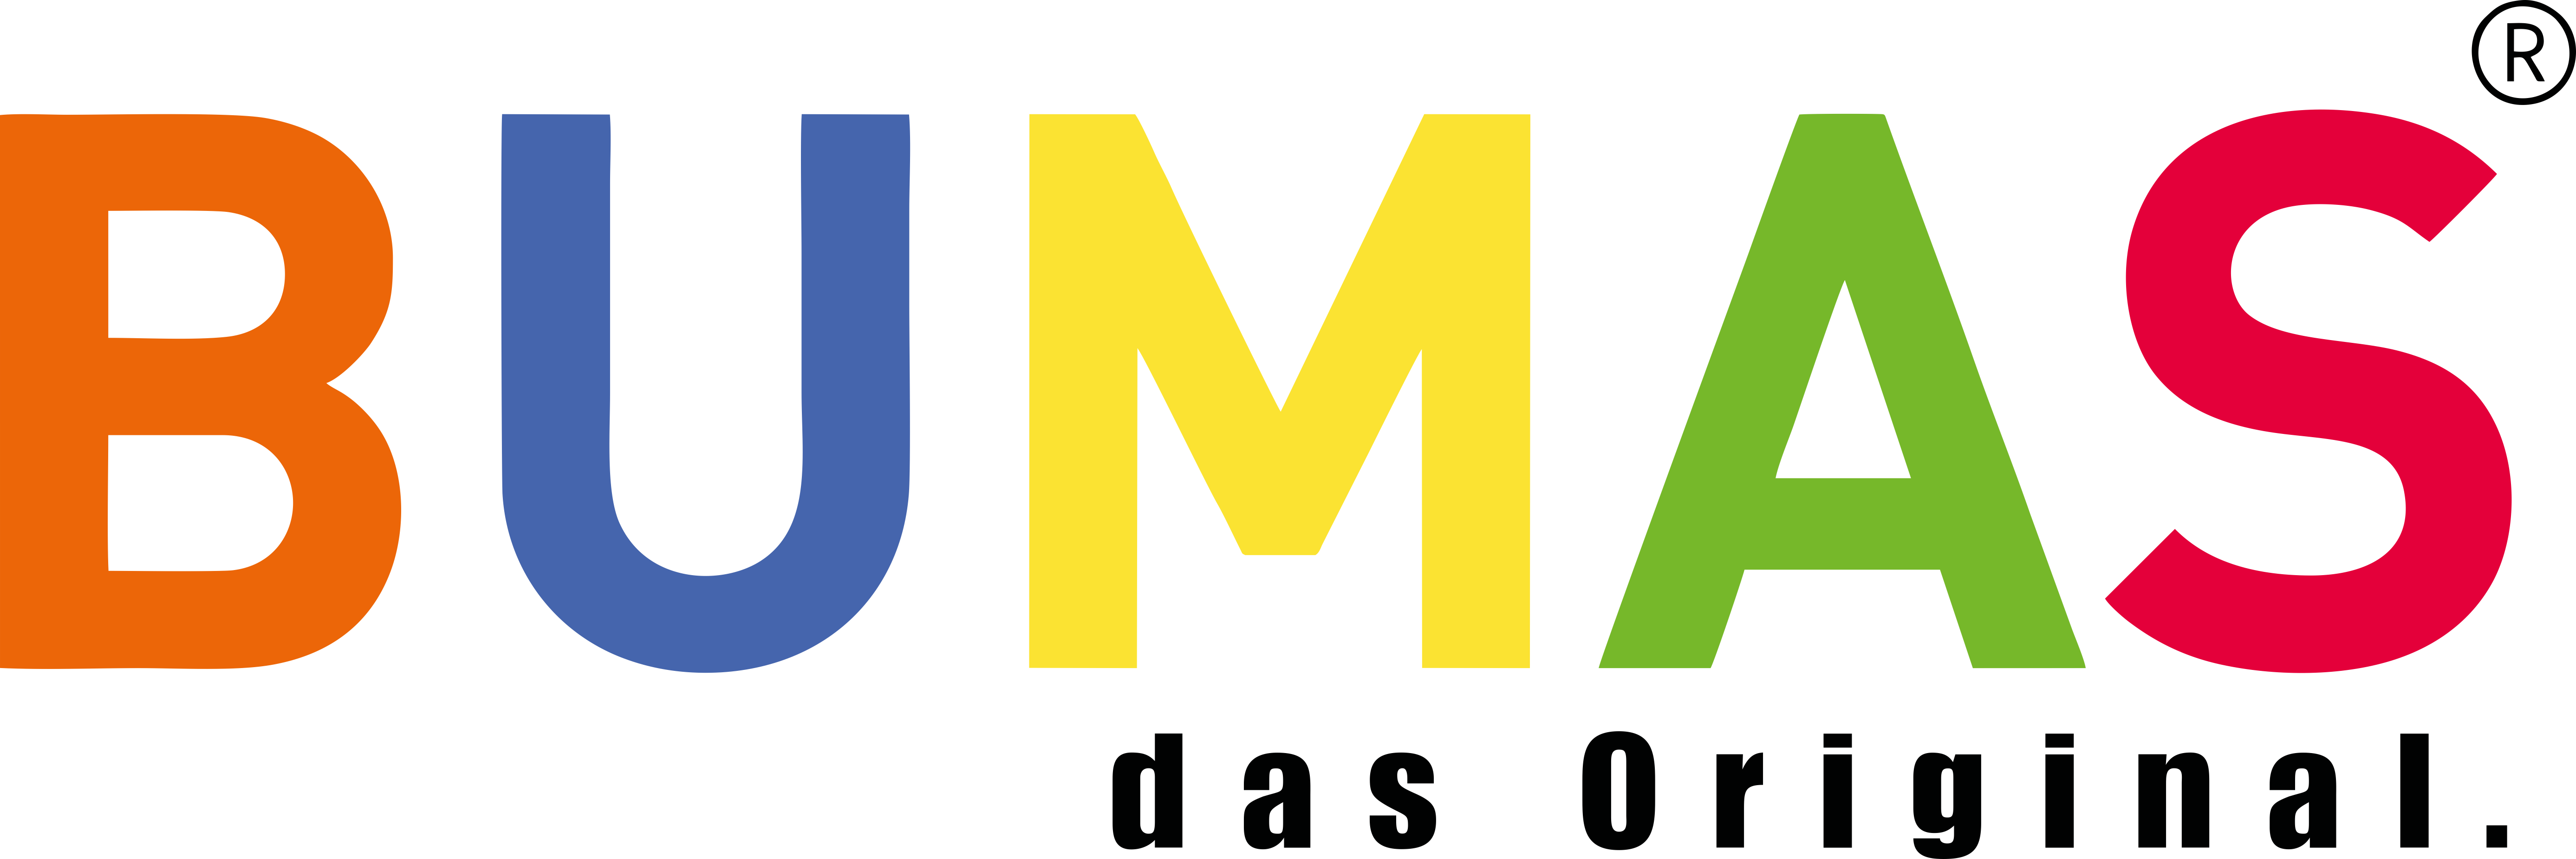 BUMAS logo